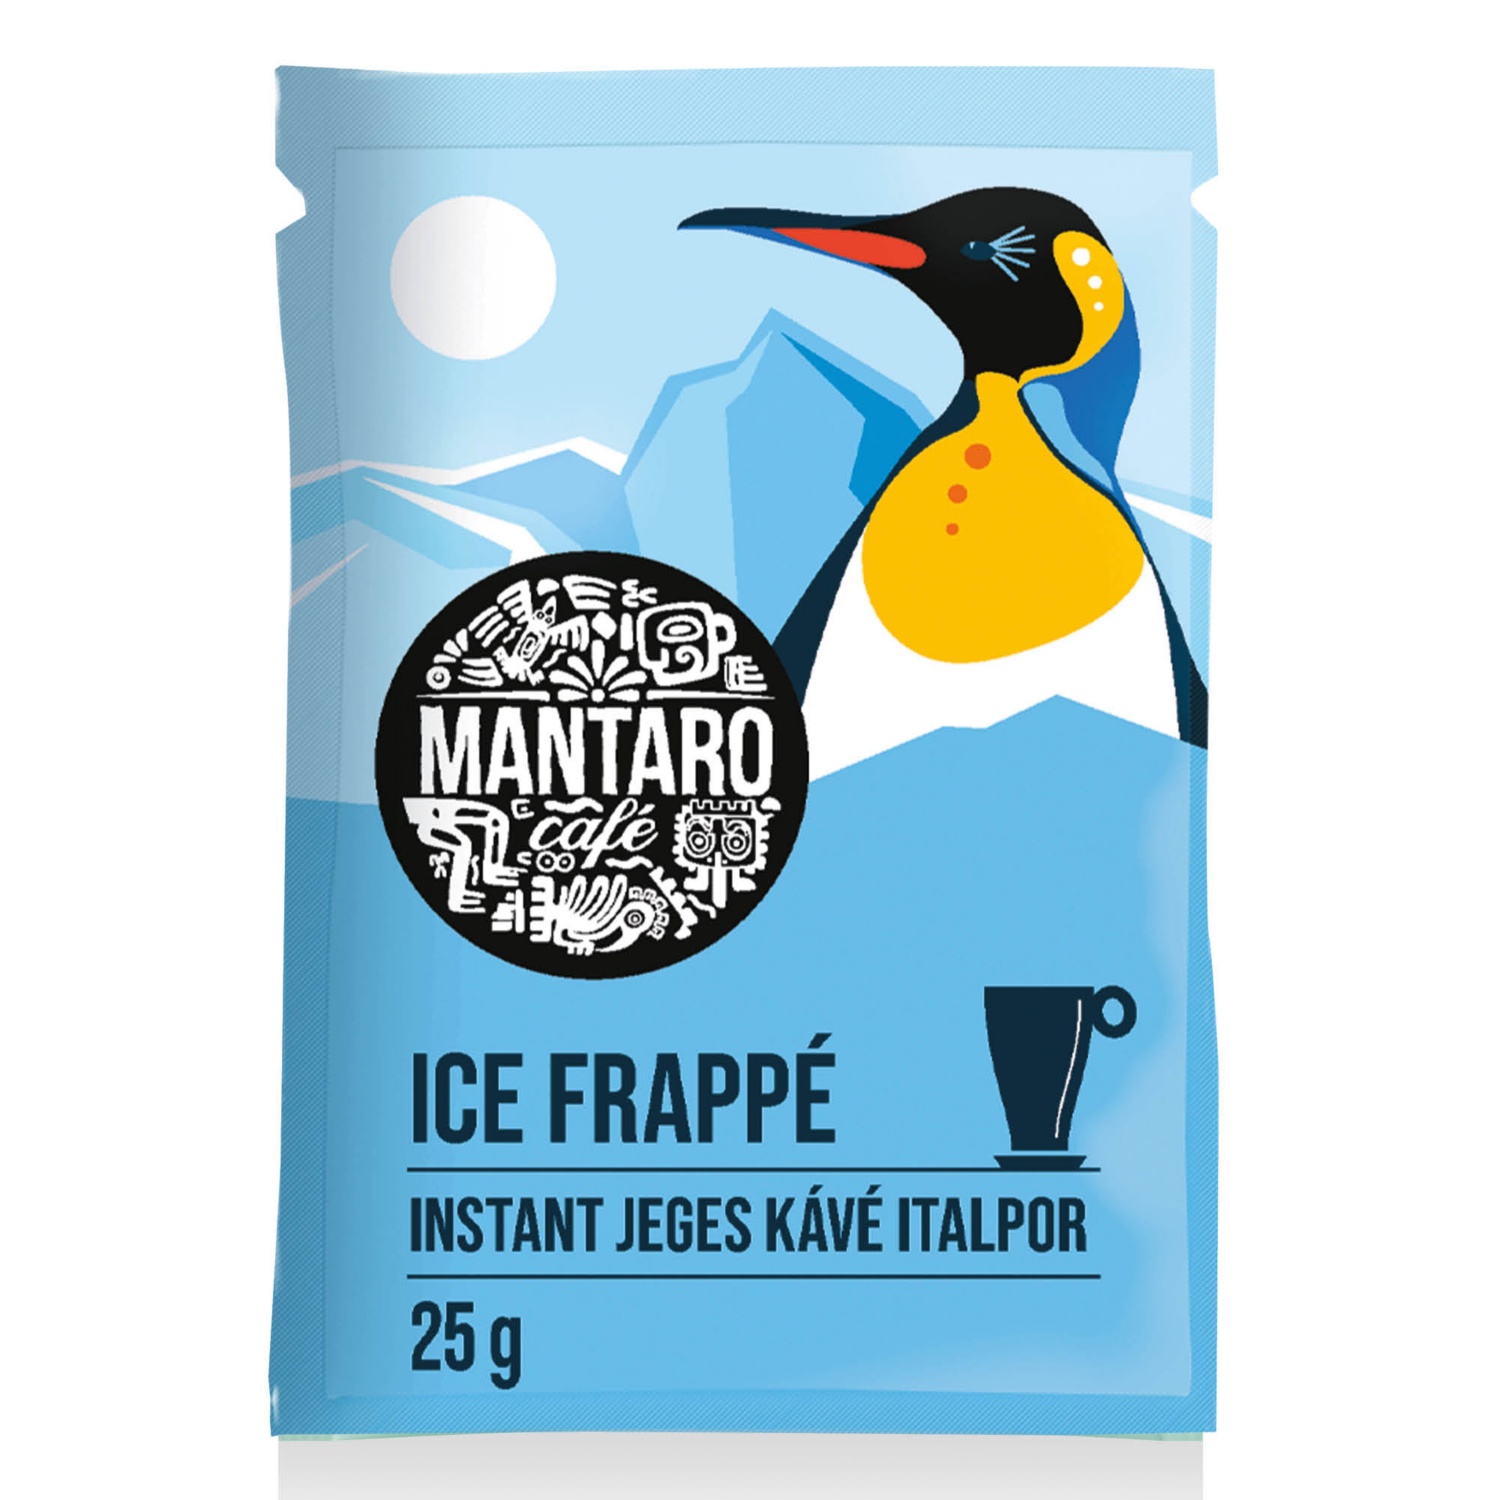 MANTARO CAFÉ Ice frappe, 25 g, klasszikus